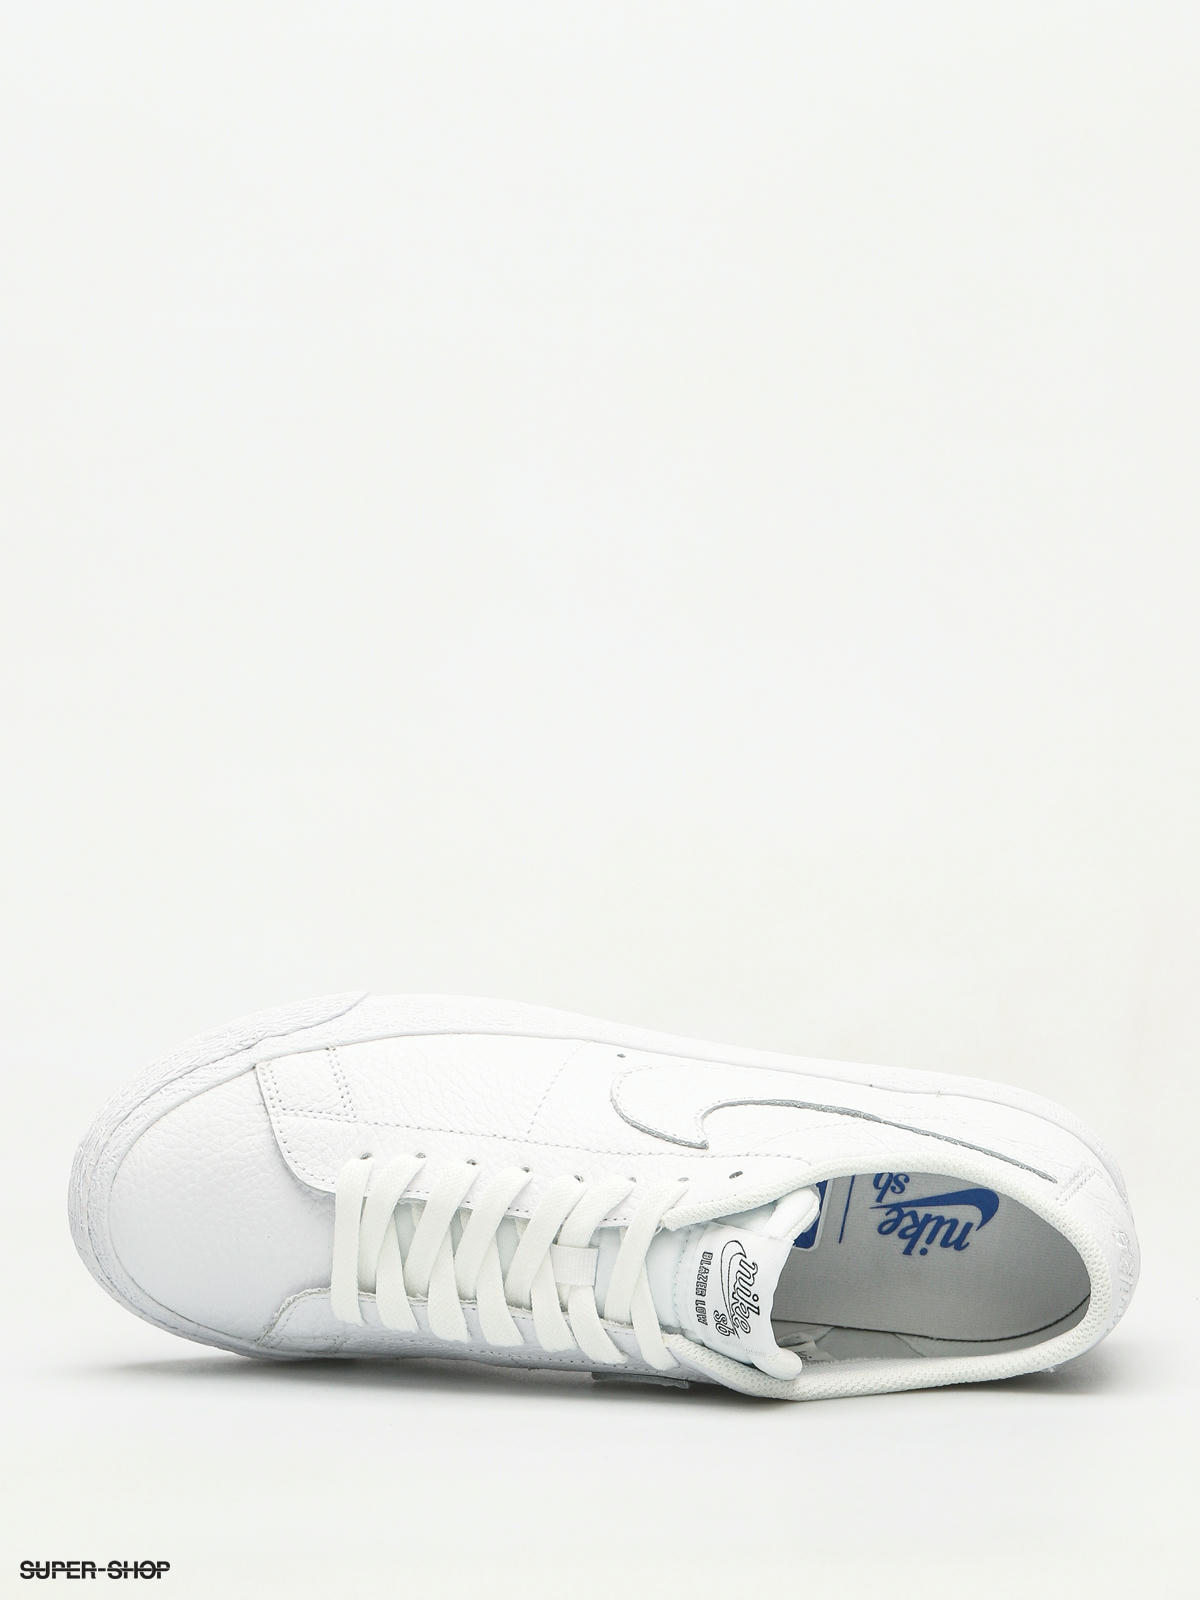 nba shoes white